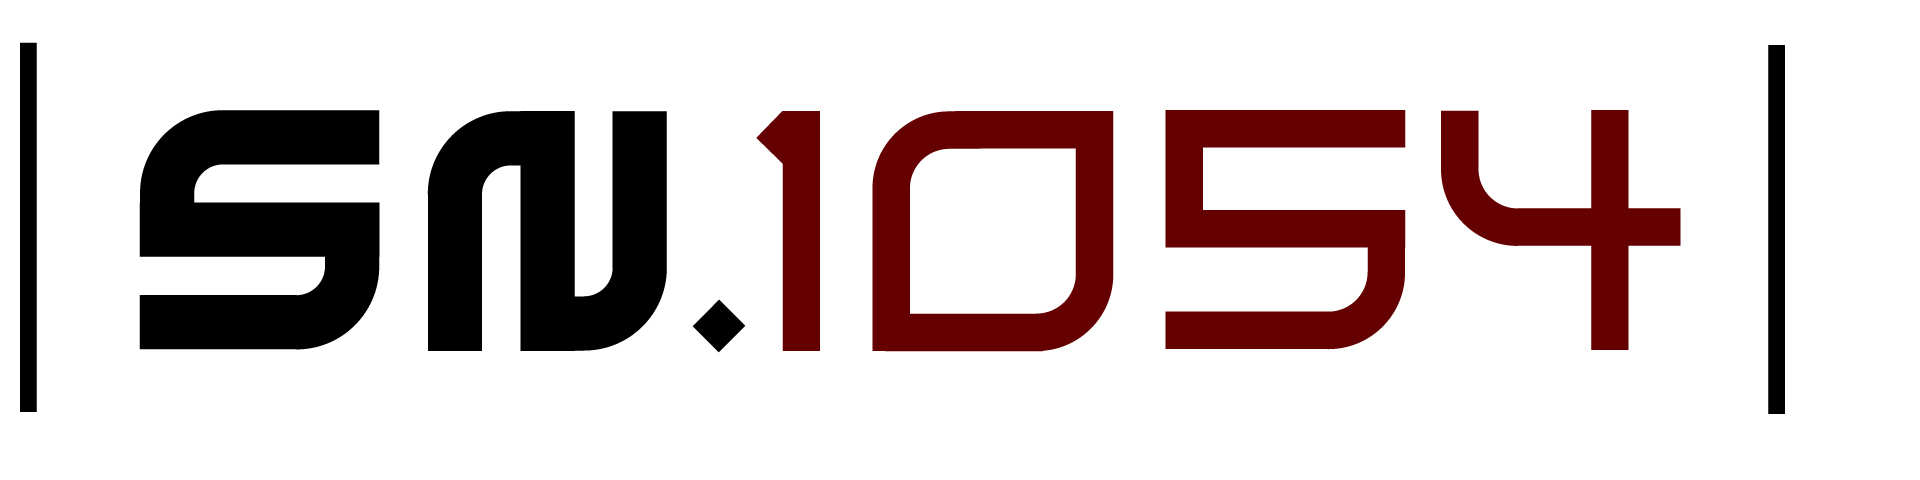 StudioNetwork1024 Logo